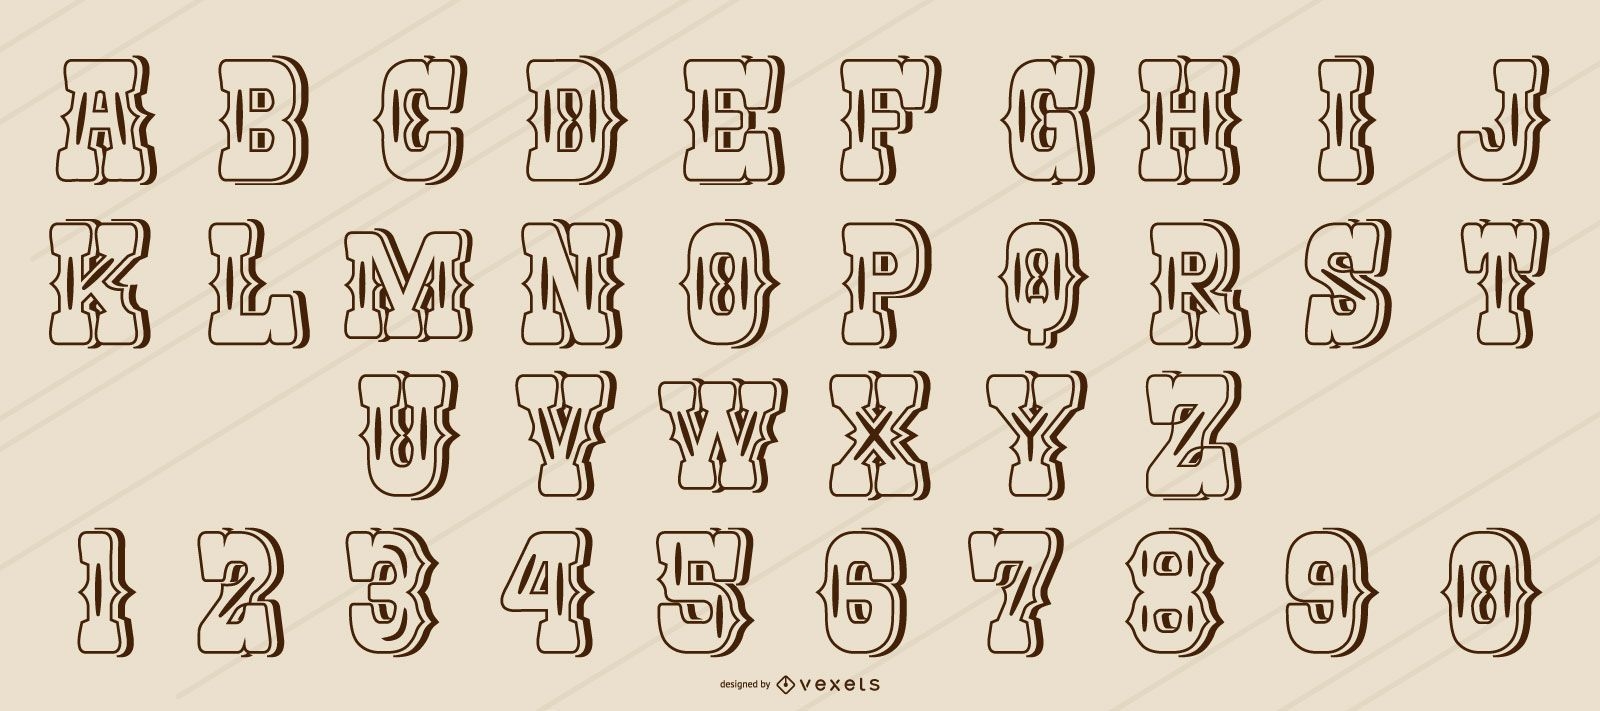 Western style stroke alphabet